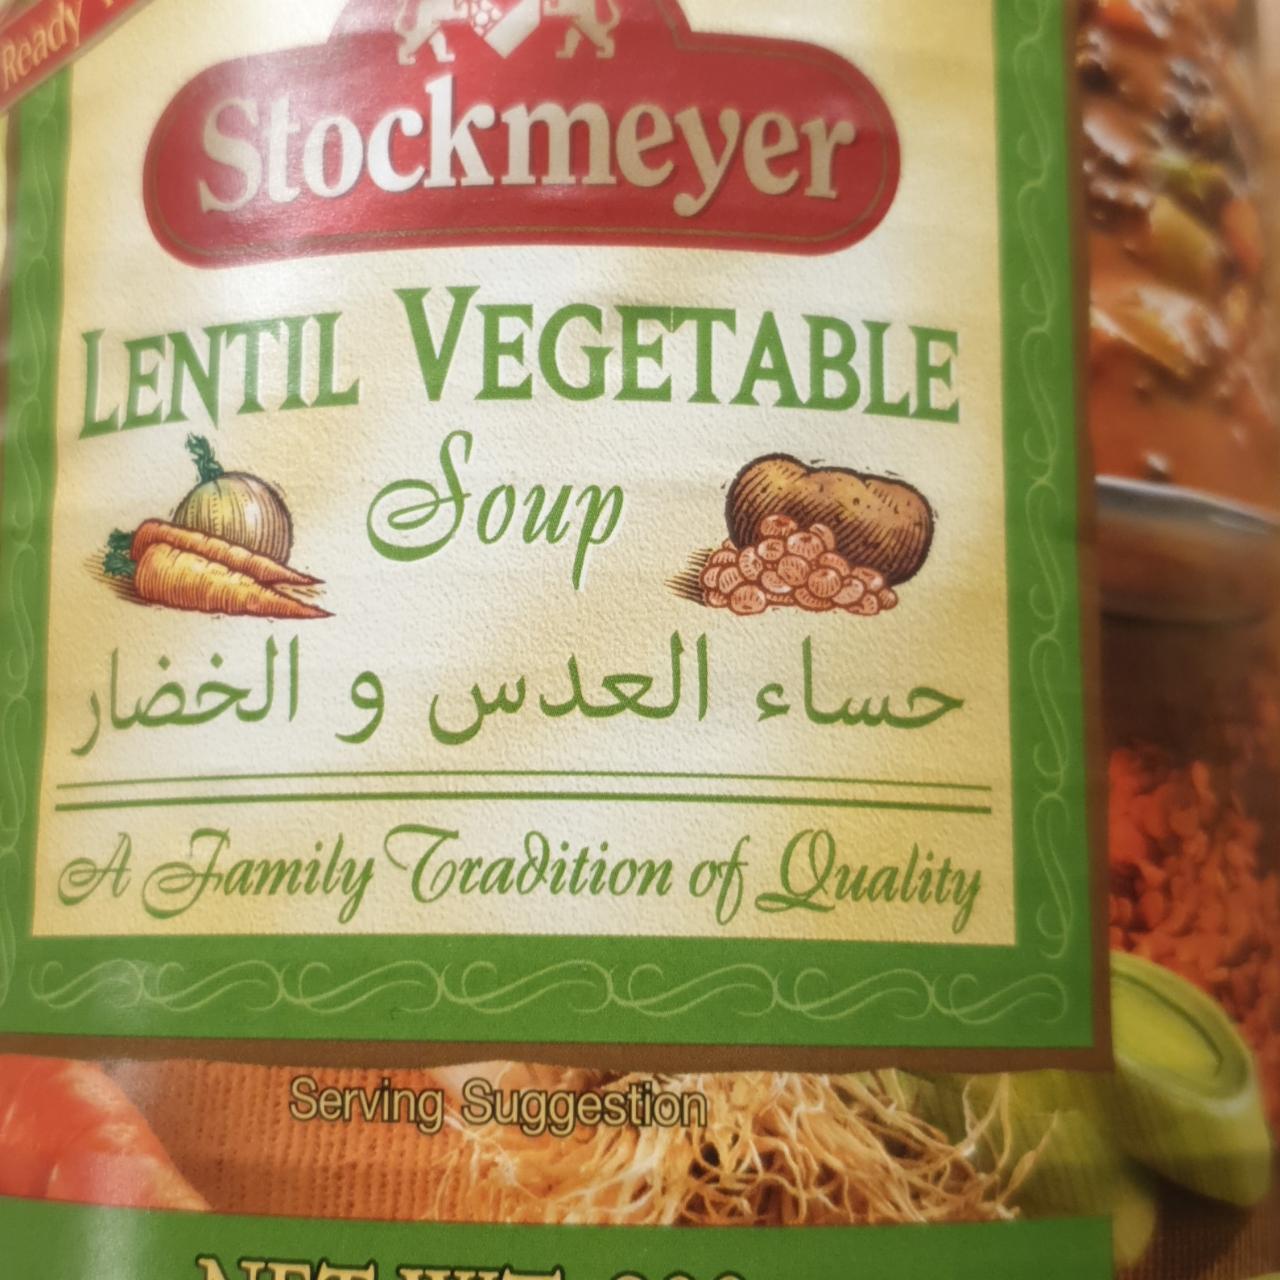 Fotografie - Lentil vegetable soup Stockmeyer